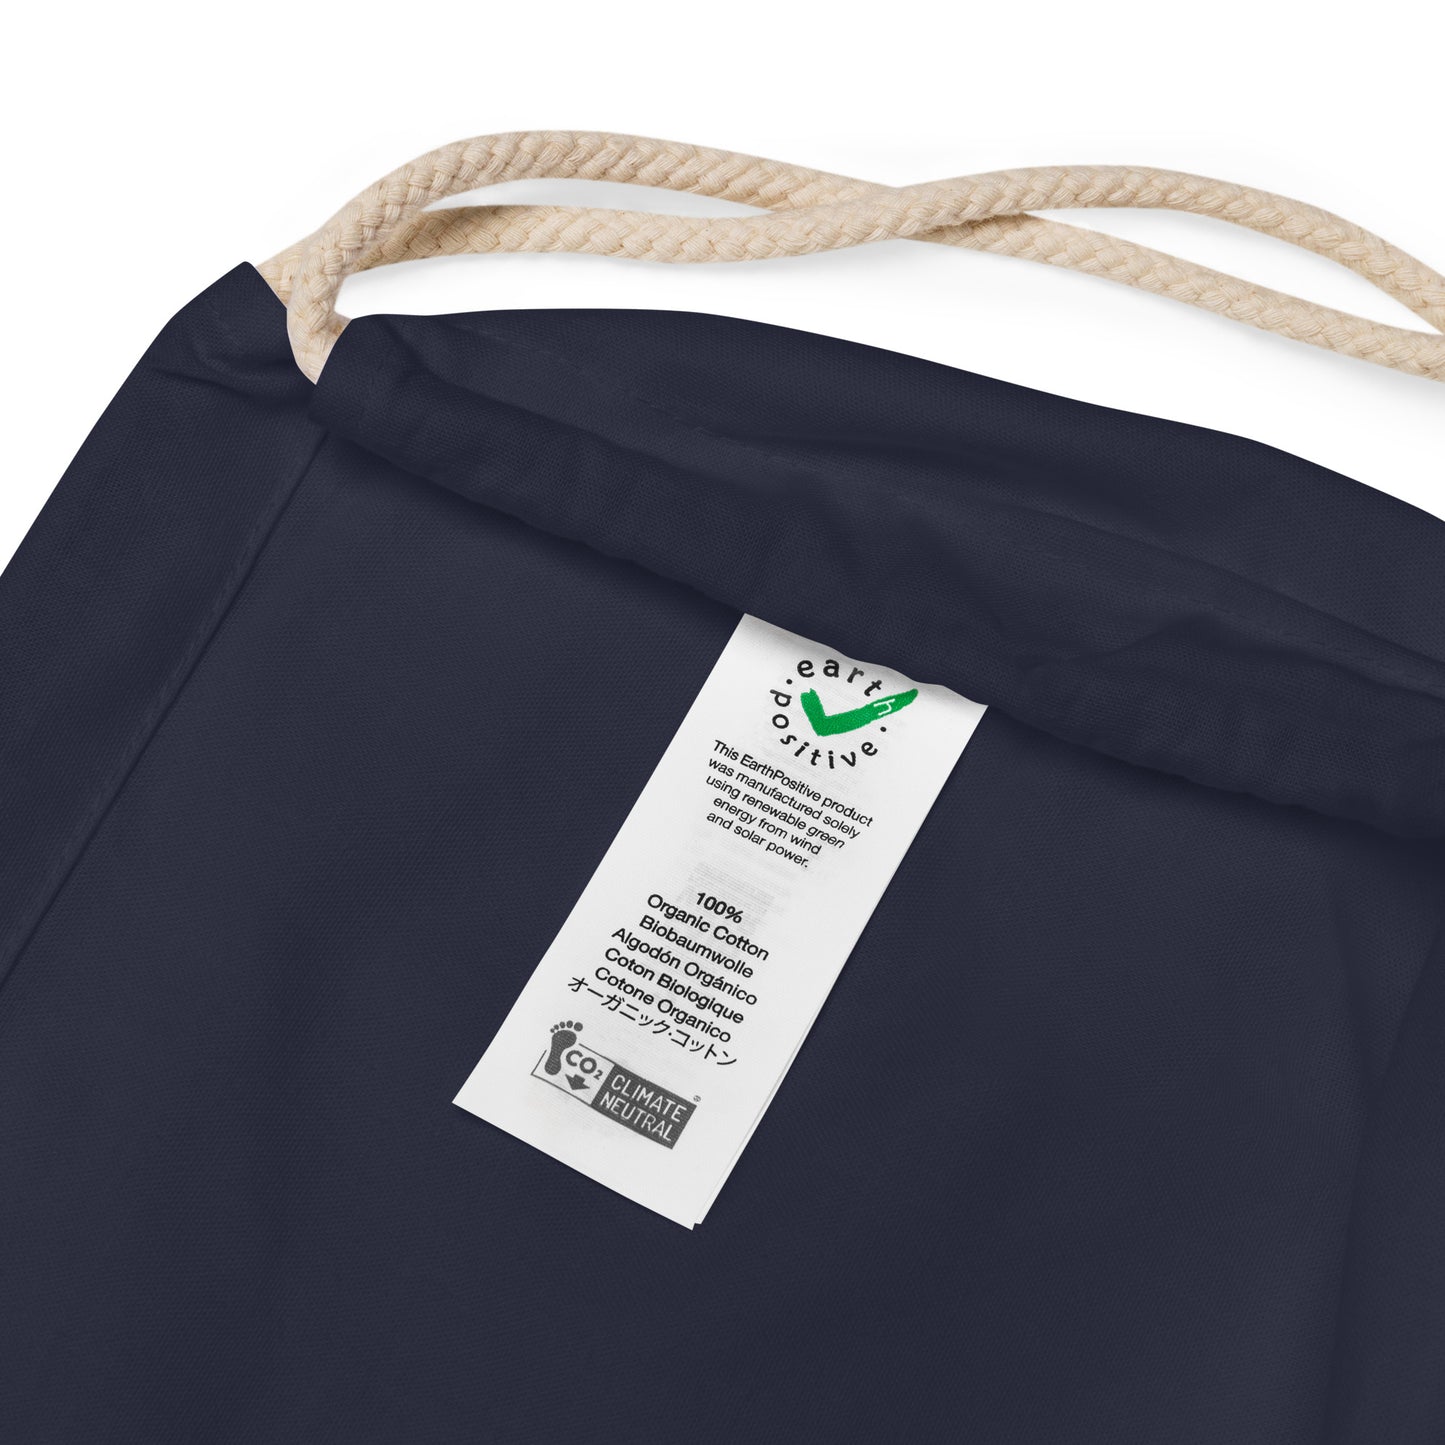 Guadalupana Organic cotton drawstring bag